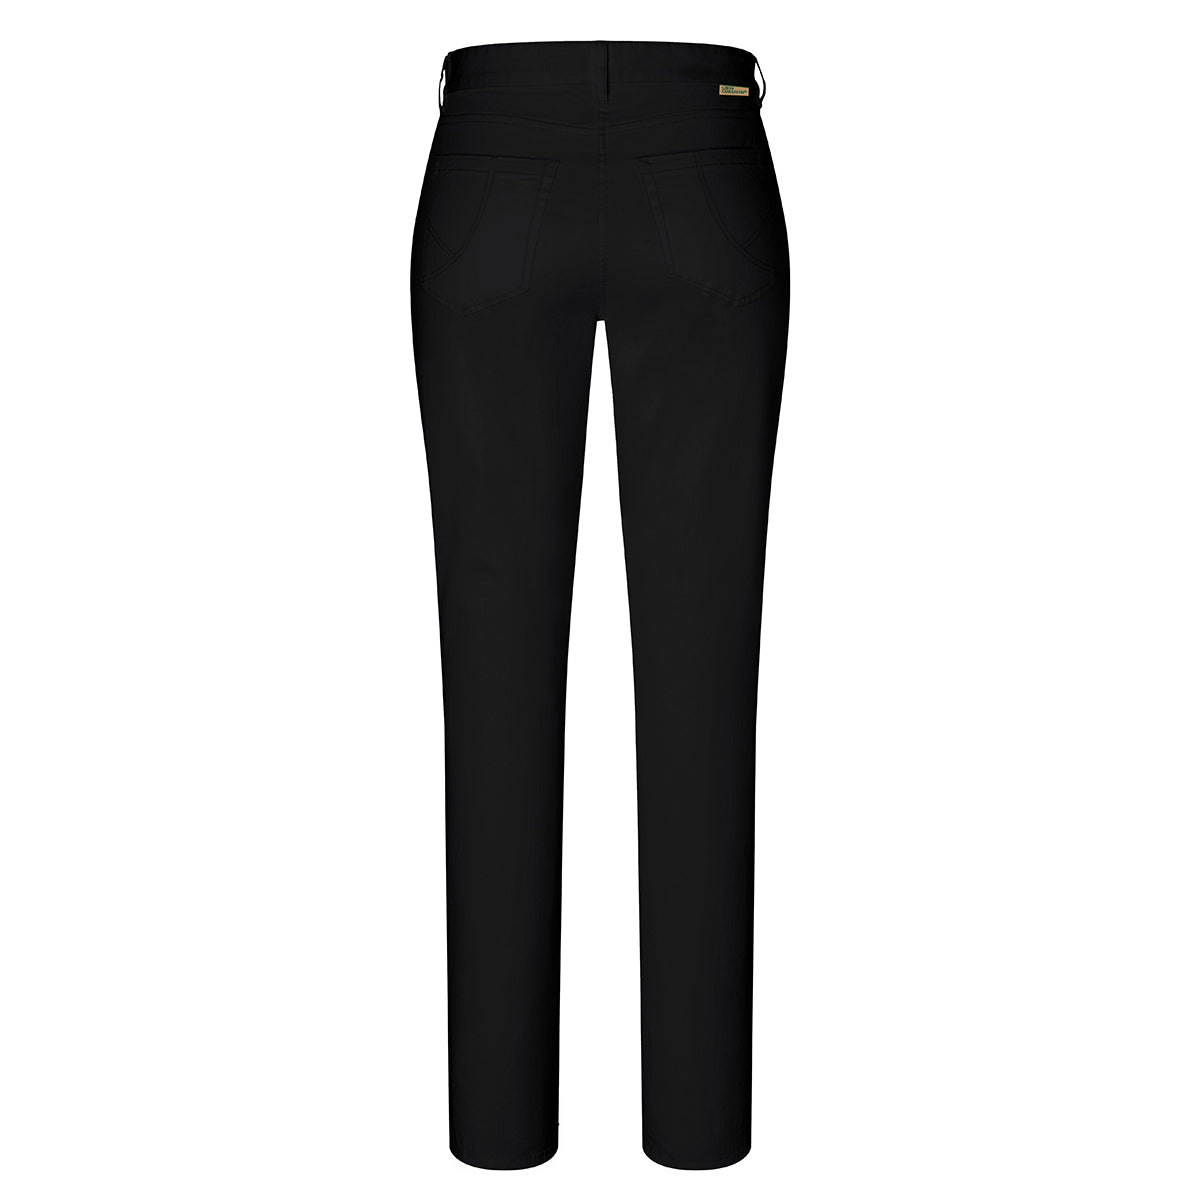 Karlowsky - 5-lomme bukser til damer - Sort - Størrelse: 50